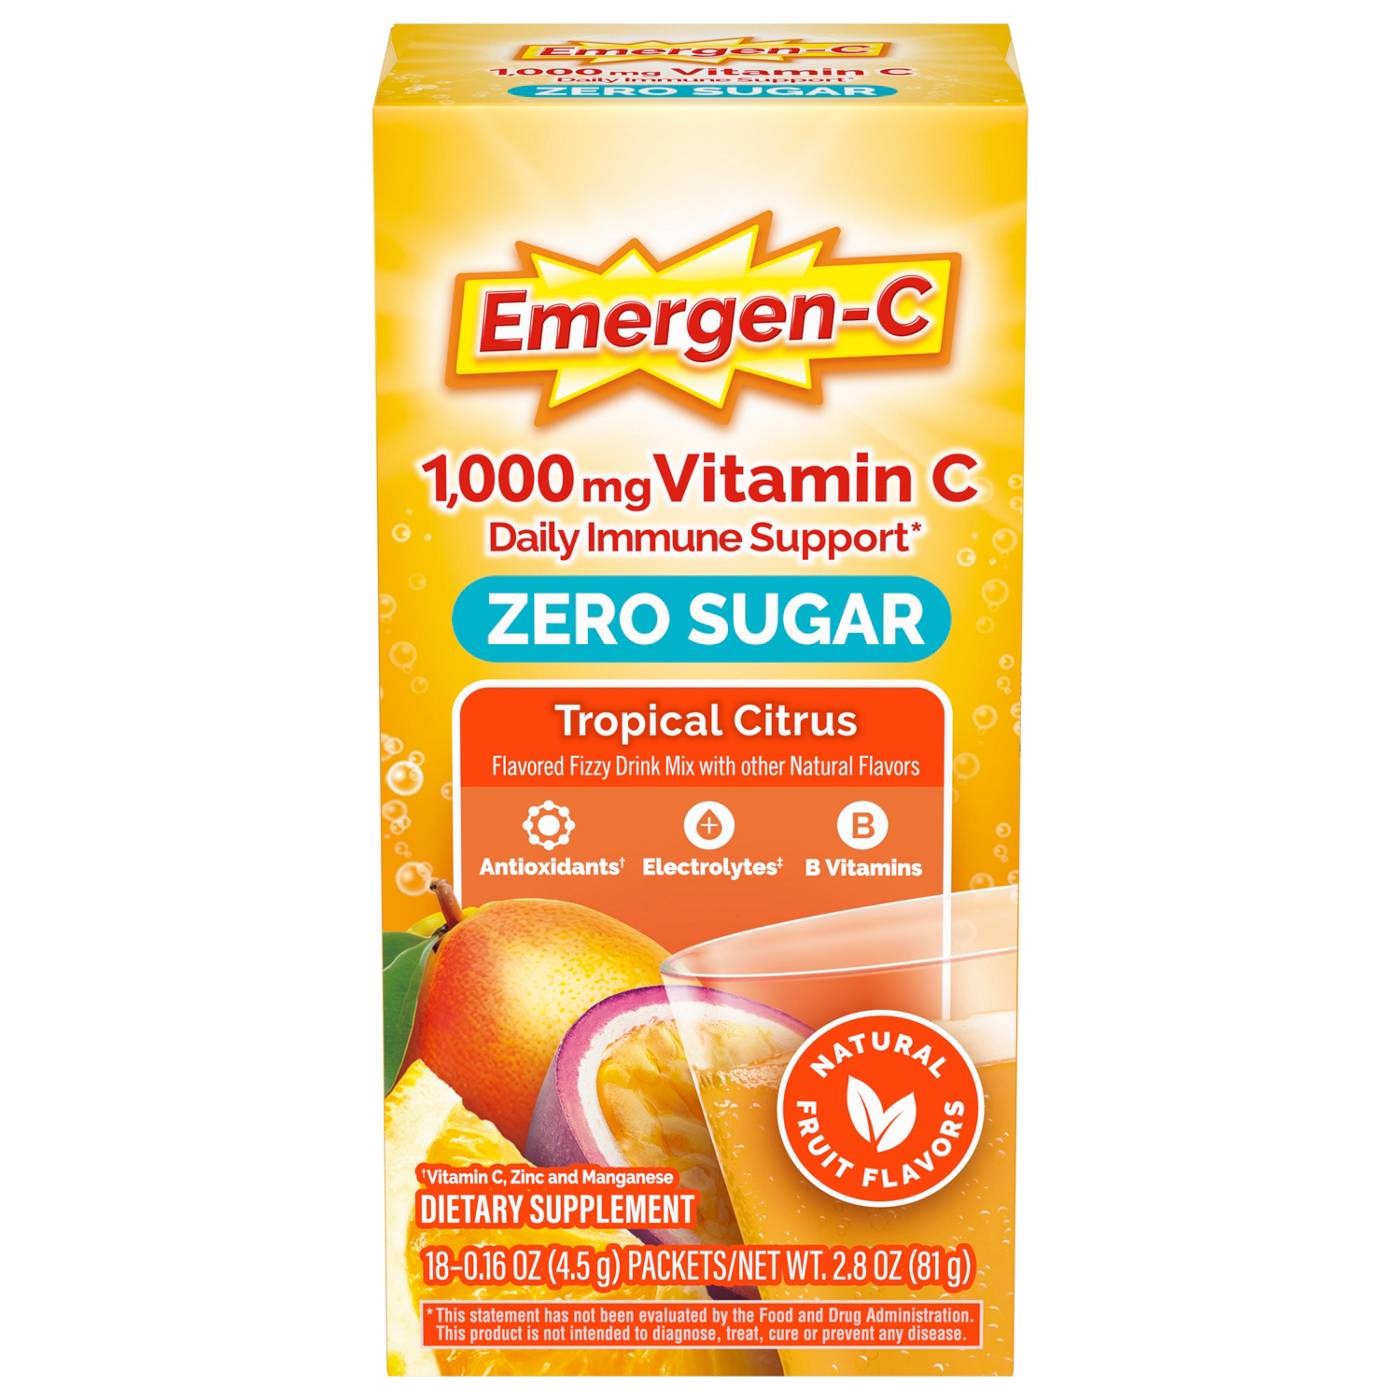 Emergen-C Zero Sugar Immune Support Packets - Tropical Citrus; image 1 of 3